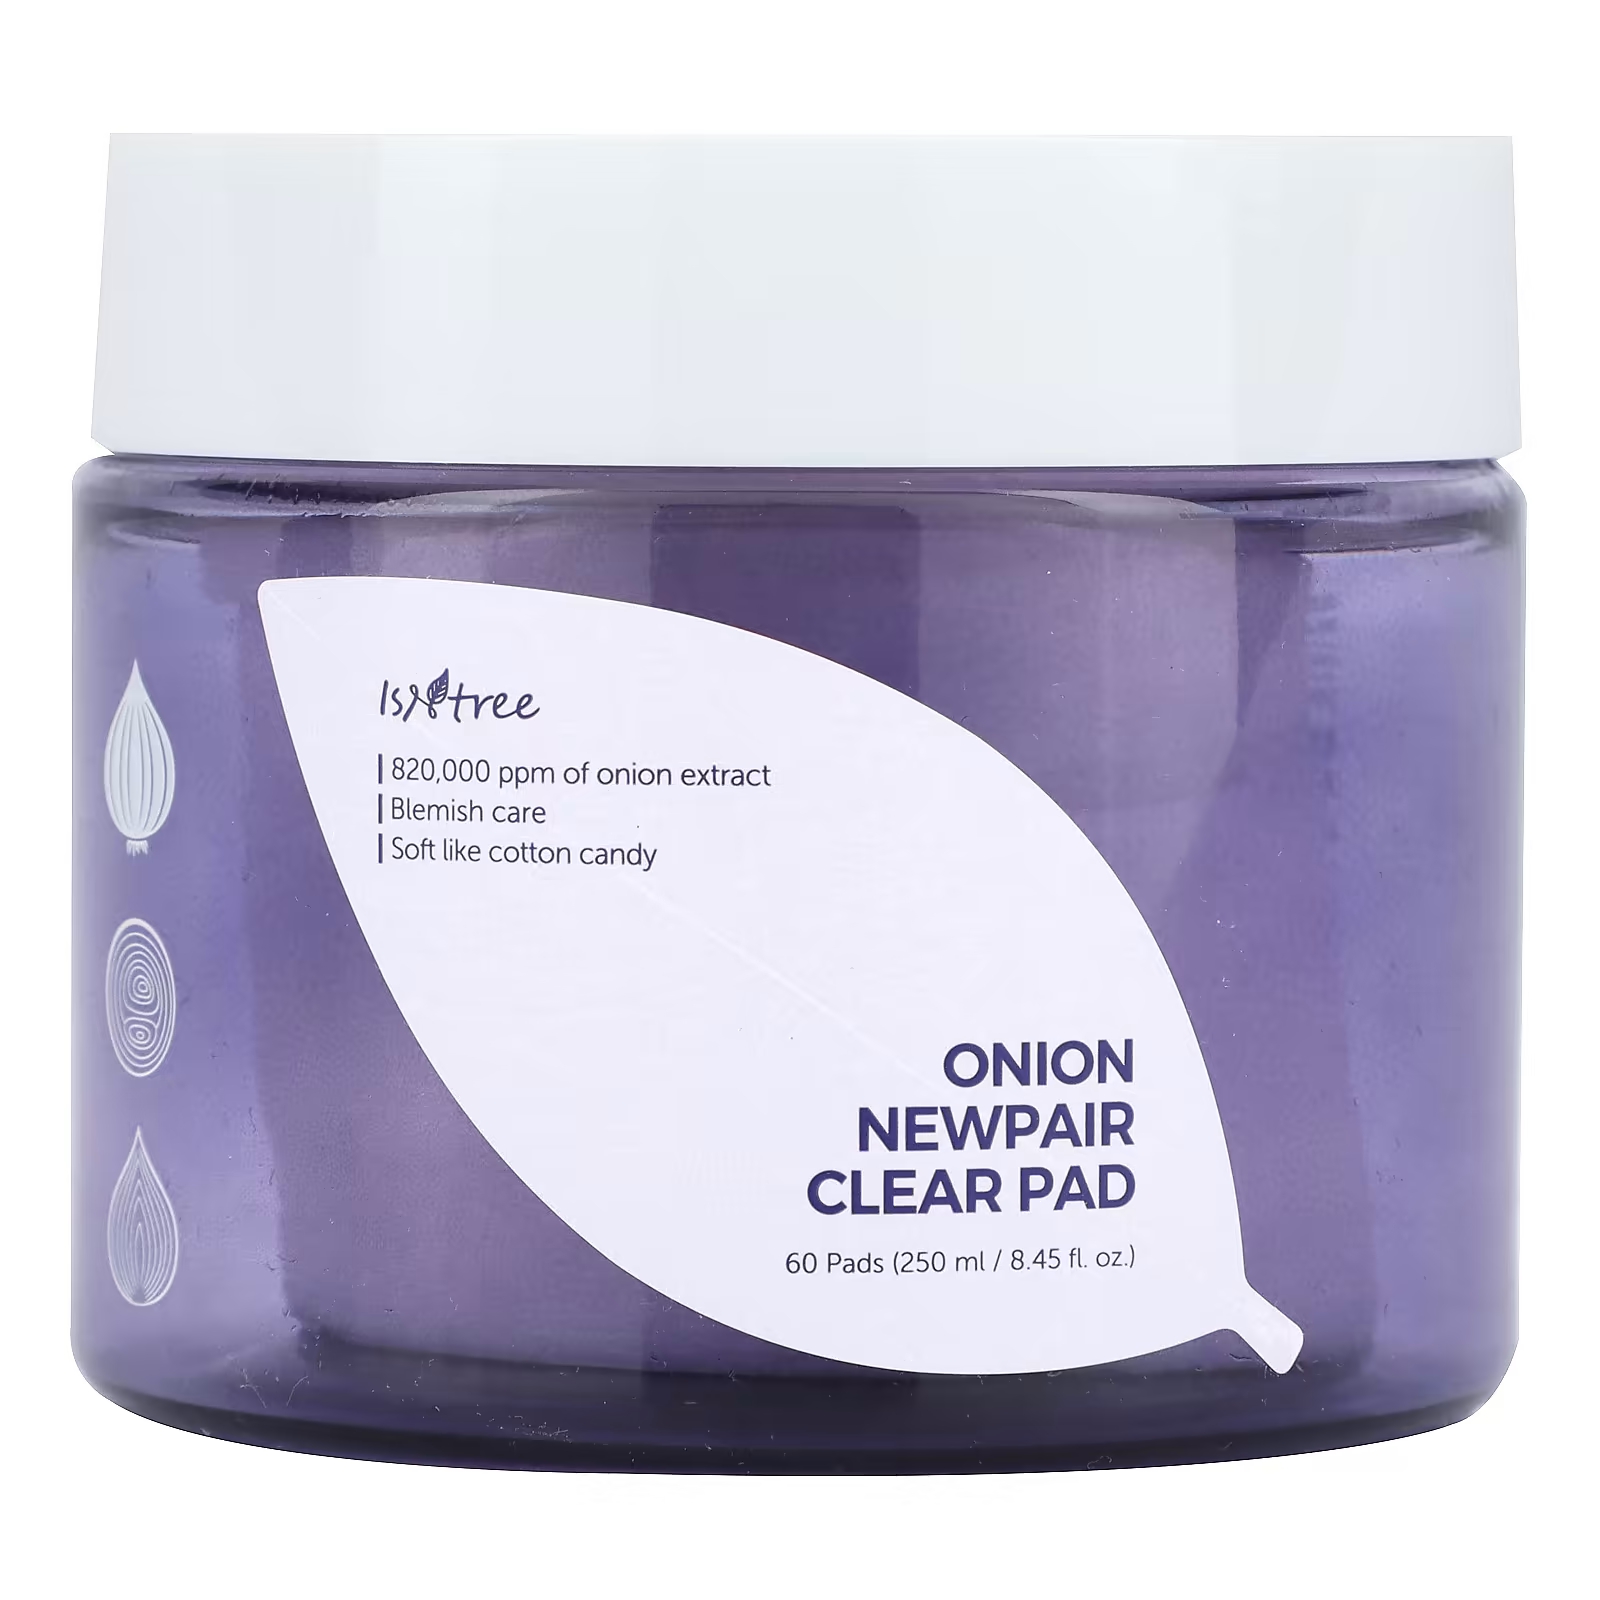 Пэды ISNtree Onion Newpair Clear Pad, 60 штук